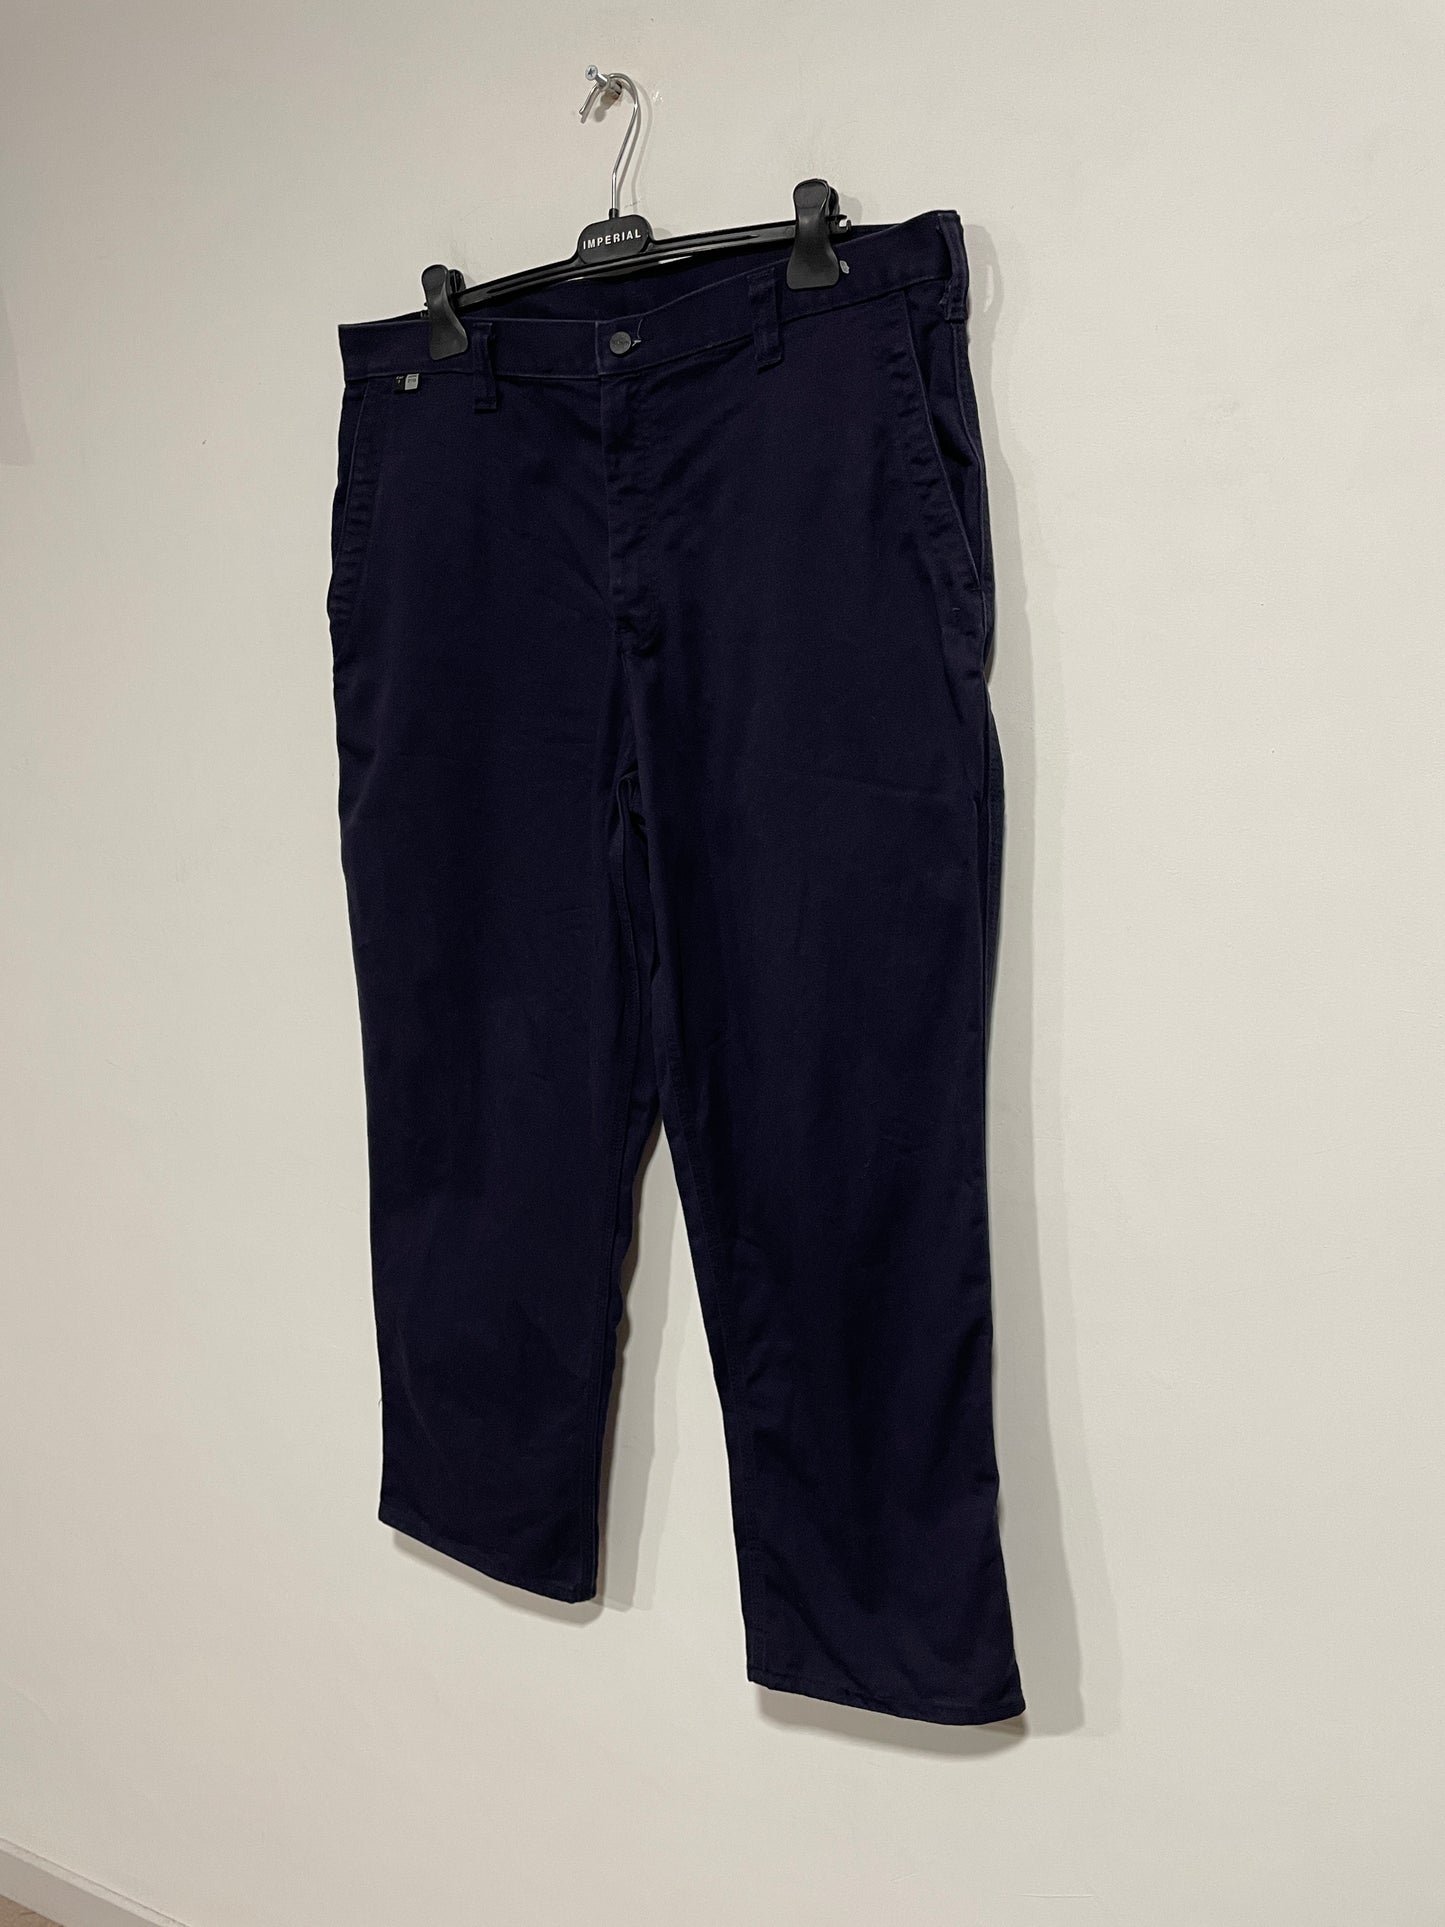 Jeans Carhartt workwear FR (MR289)